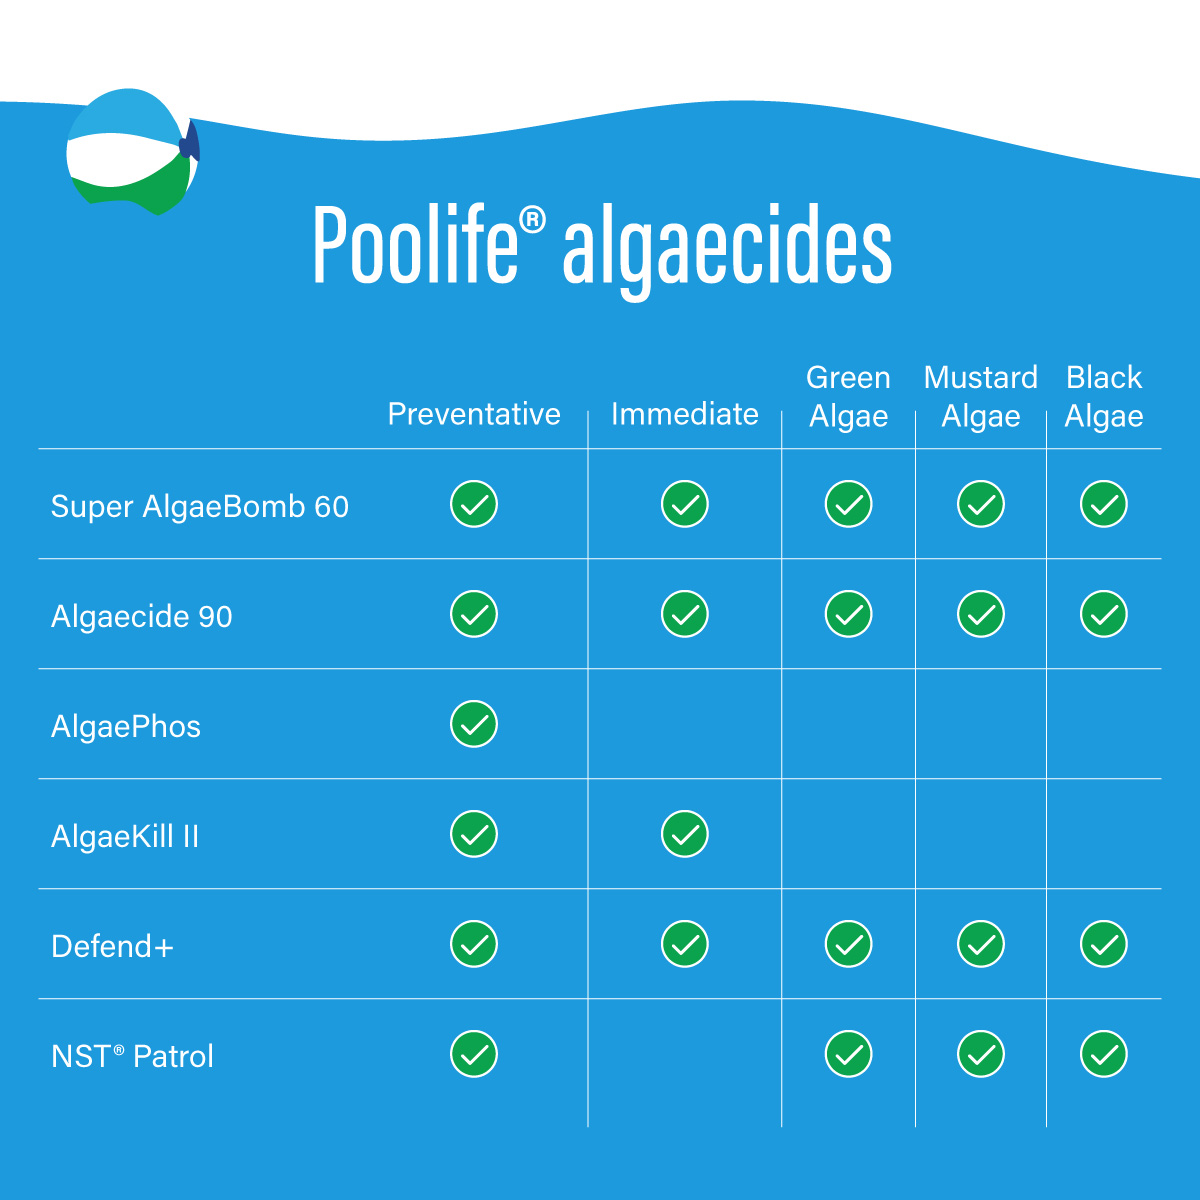 Poolife algaecides chart showing all checks for this product: Prevenative, Immediate, Green algae, Mustard Algae, Black Algae